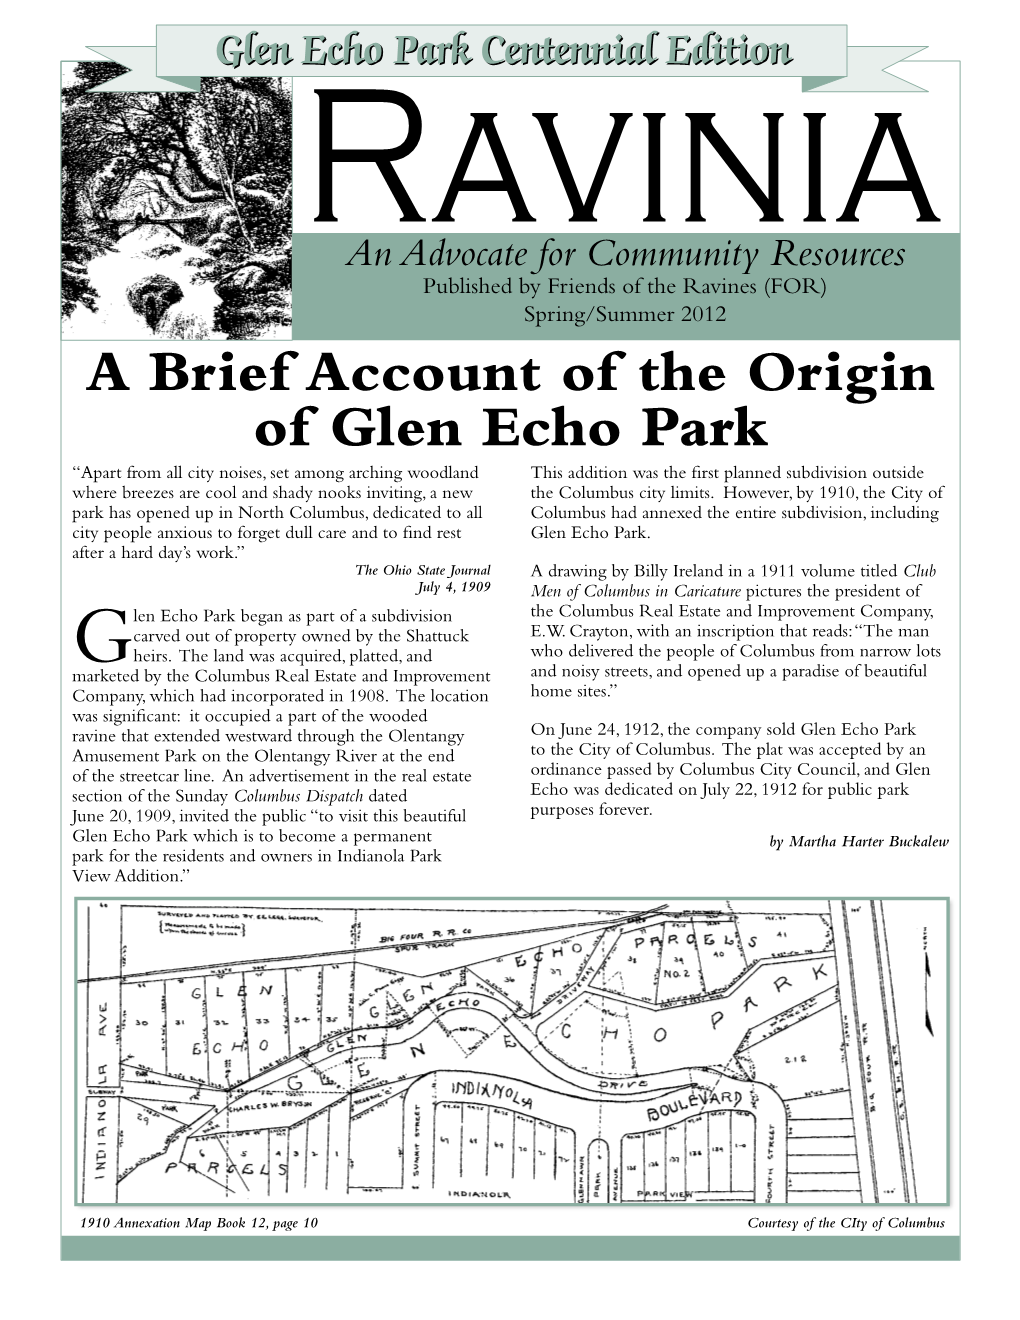 A Brief Account of the Origin of Glen Echo Park